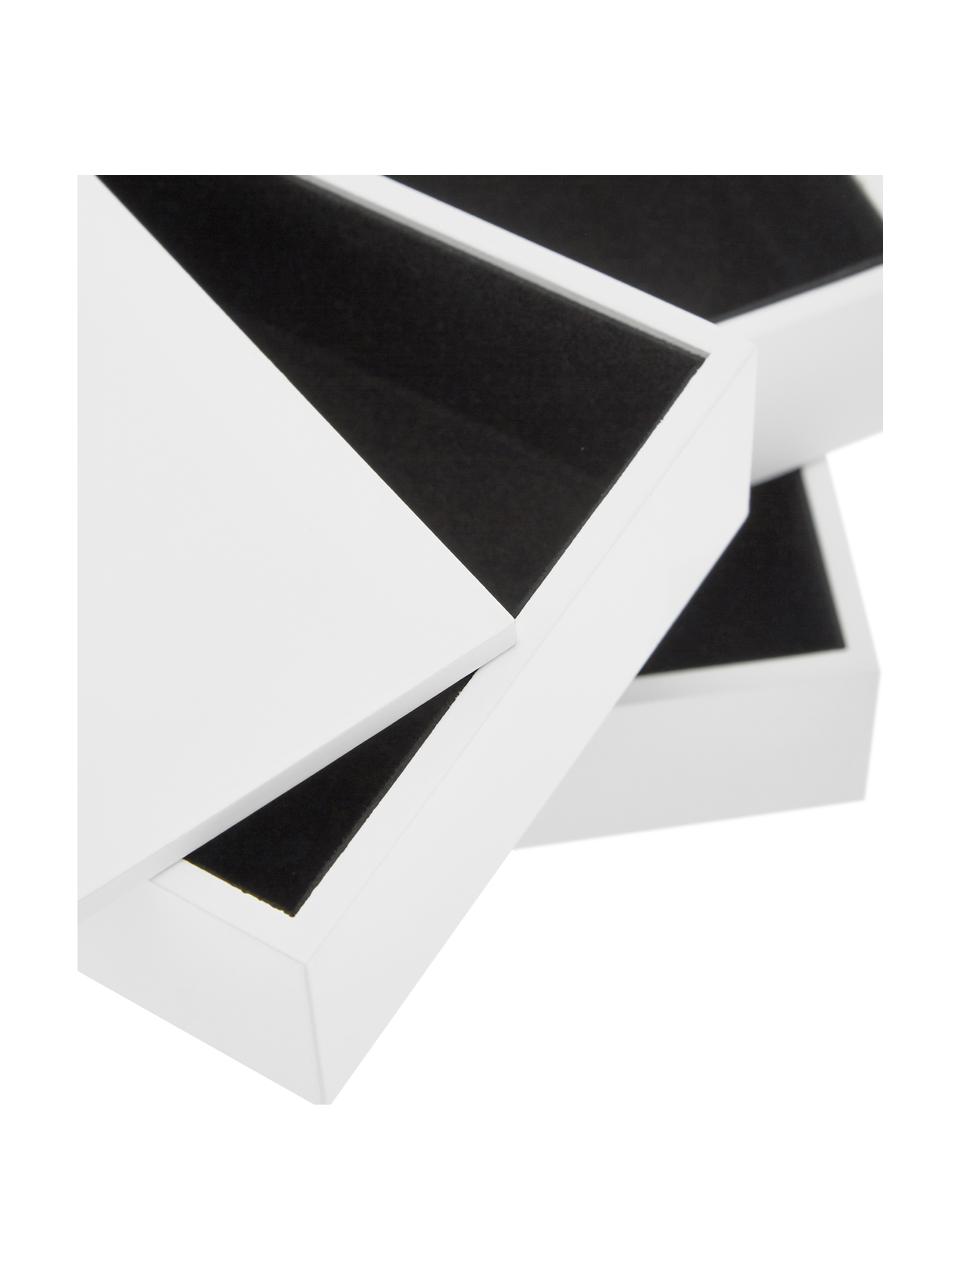 Schmuckbox Spindle, Buchenholz, lackiert, Weiß, B 19 x H 13 cm